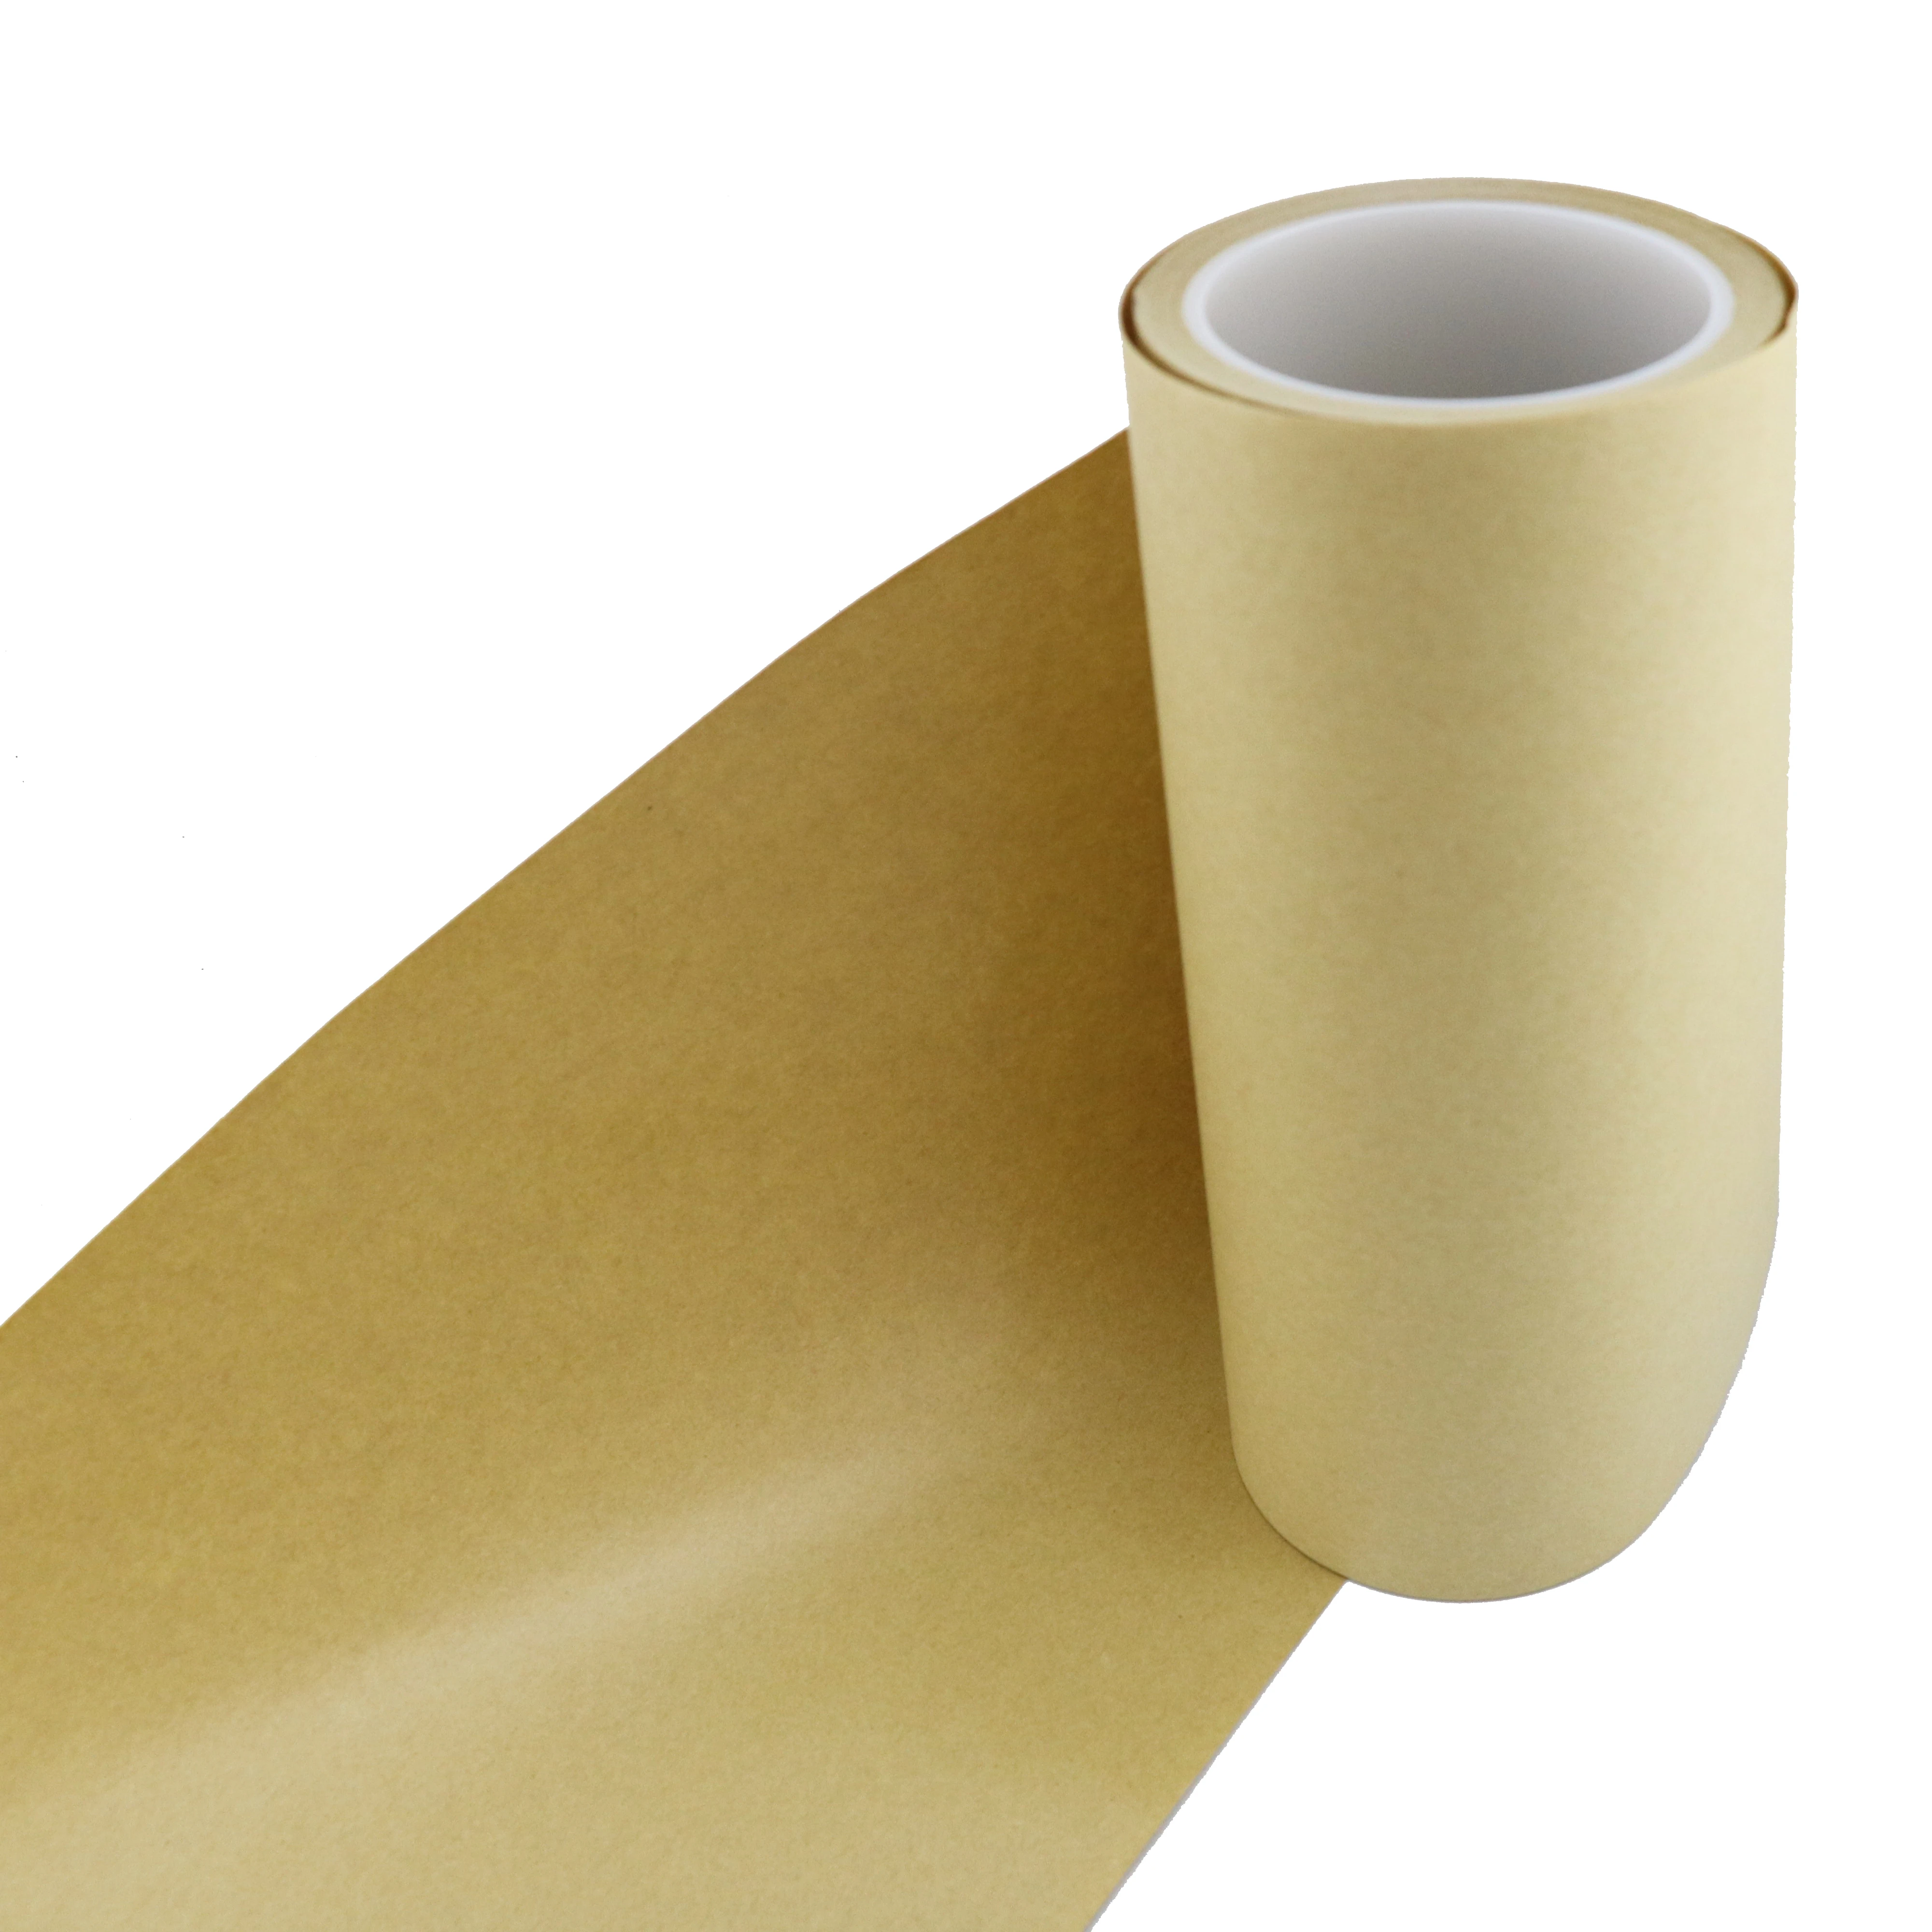 Single Kraft Paper Wrap